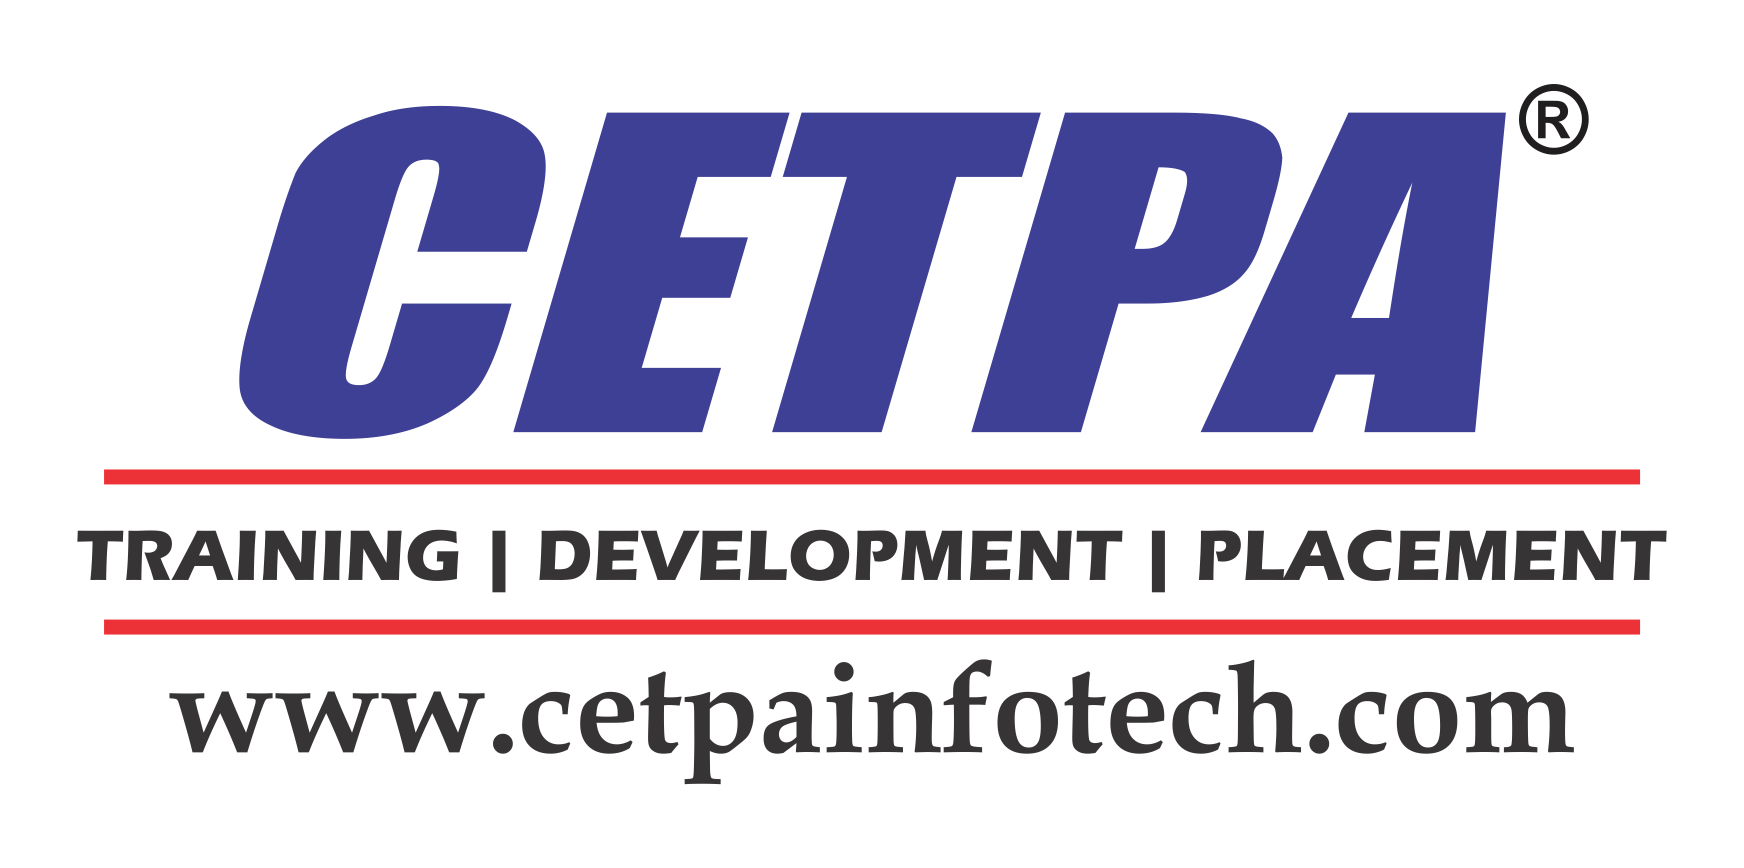 Cetpa Tech